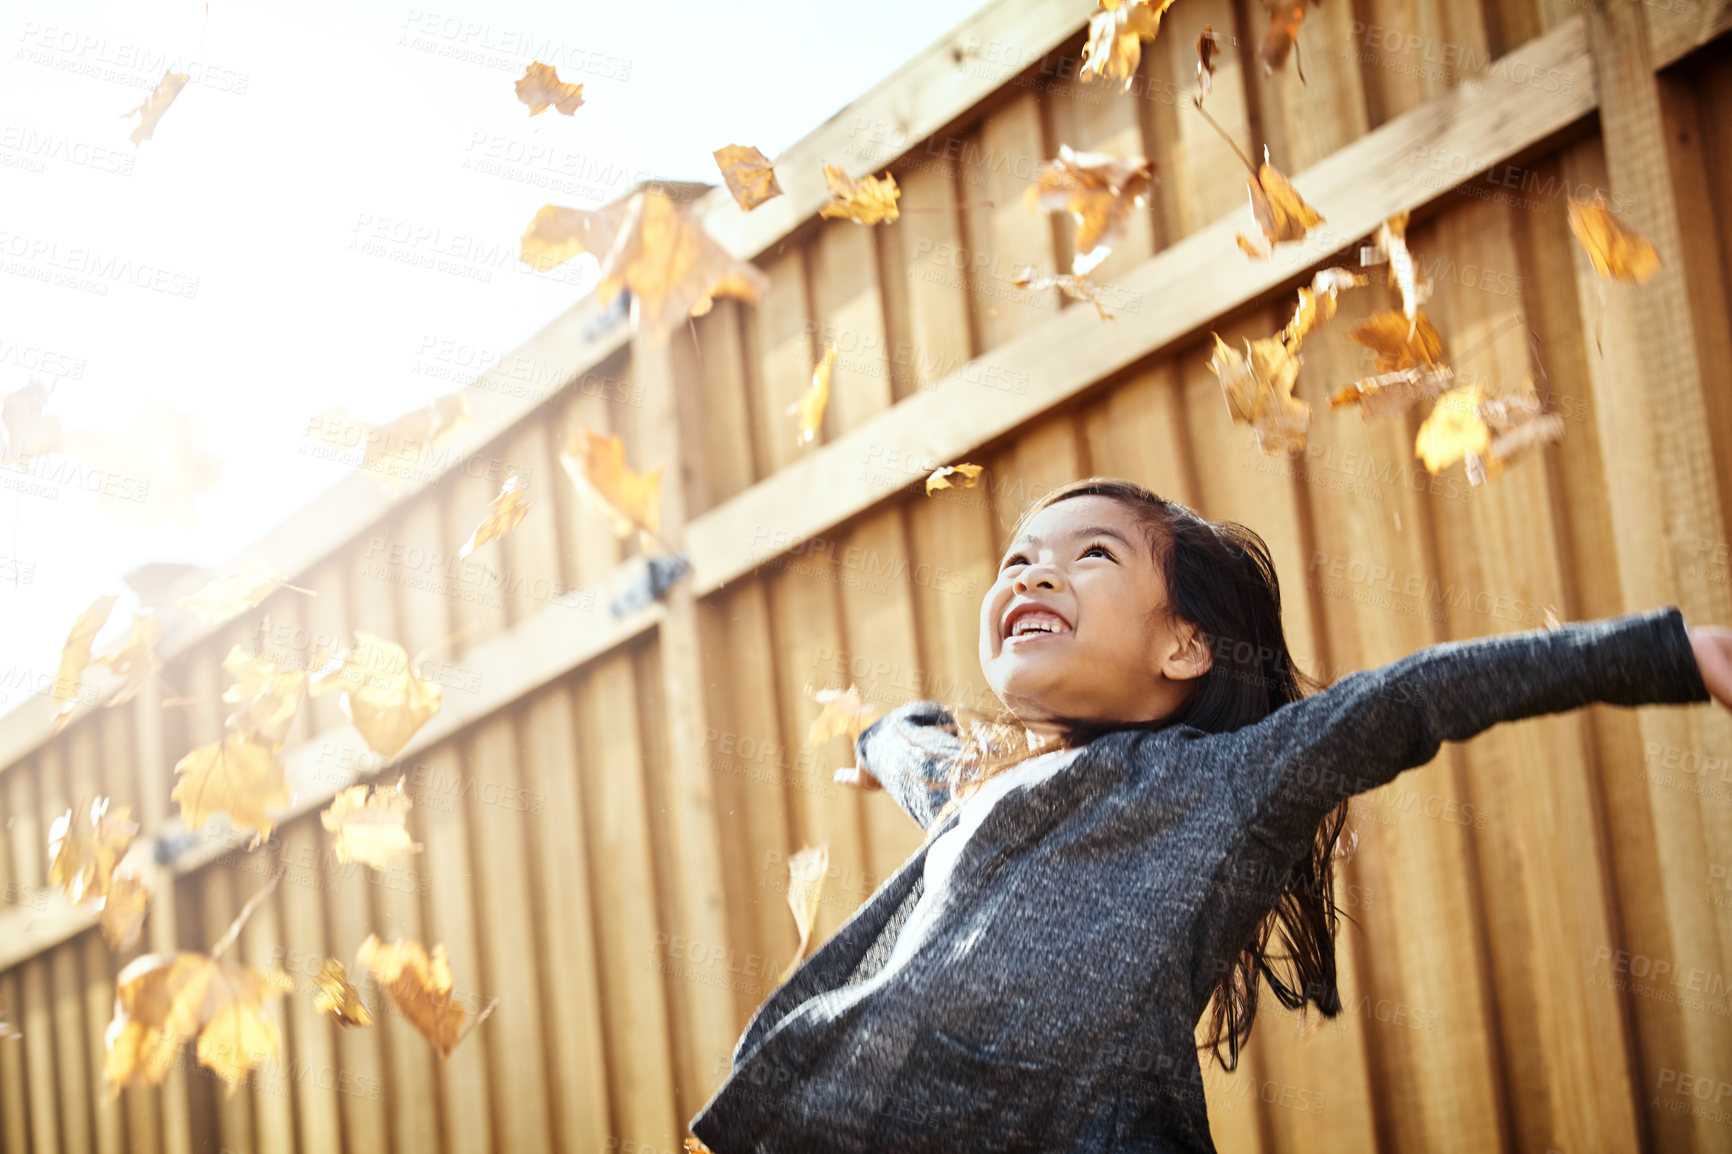 Buy stock photo Shot of an adorable little girl enjoying an autumn day outdoors